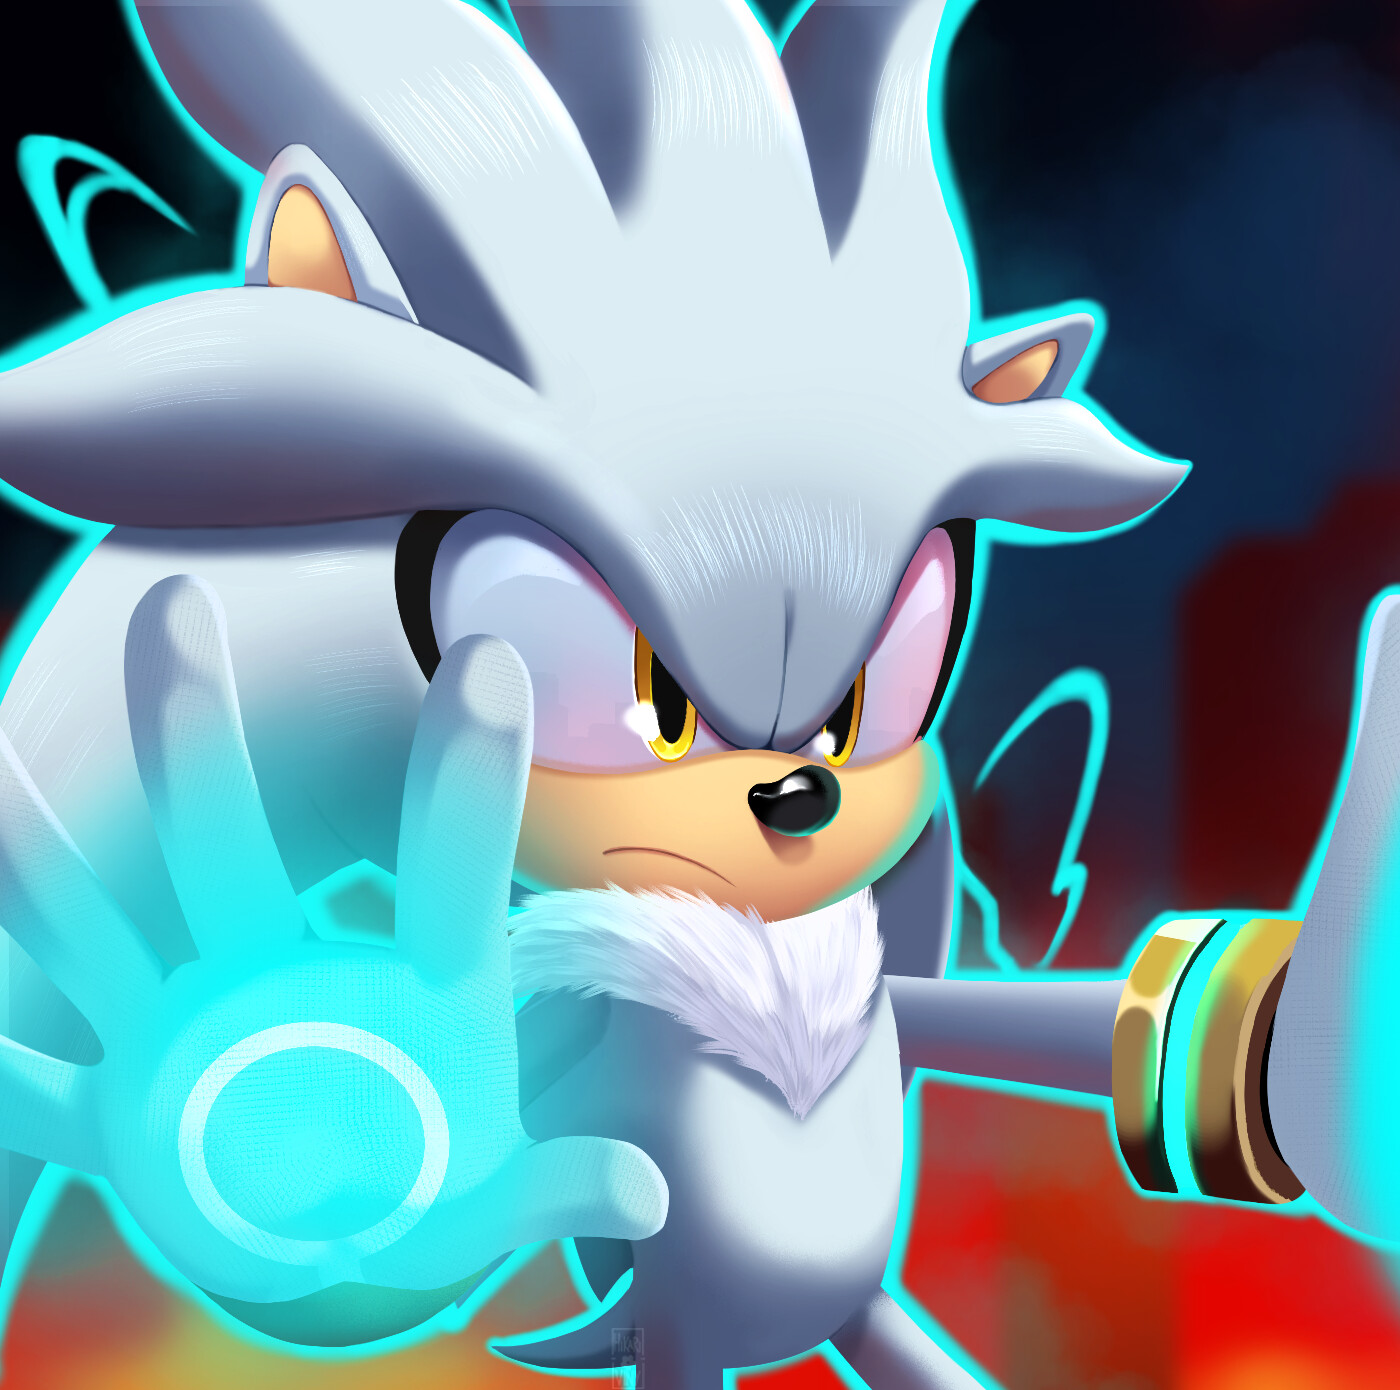 ArtStation - Silver the Hedgehog